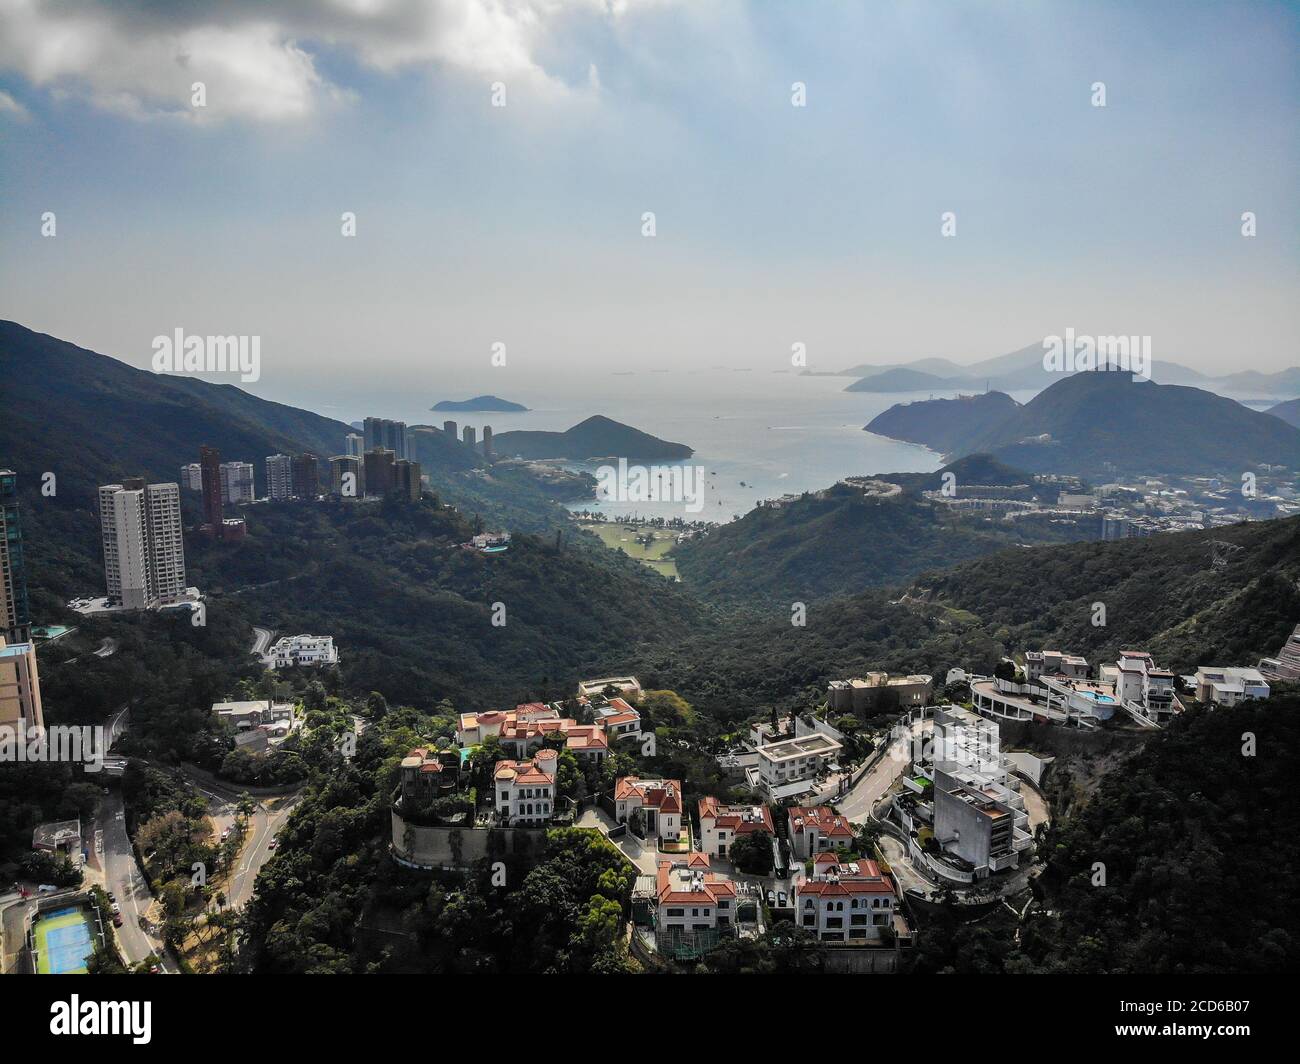 An aerial photograph taken above Happy Valley, Hong Kong, looking towards Deep Water Bay and the South China Sea. Stock Photo